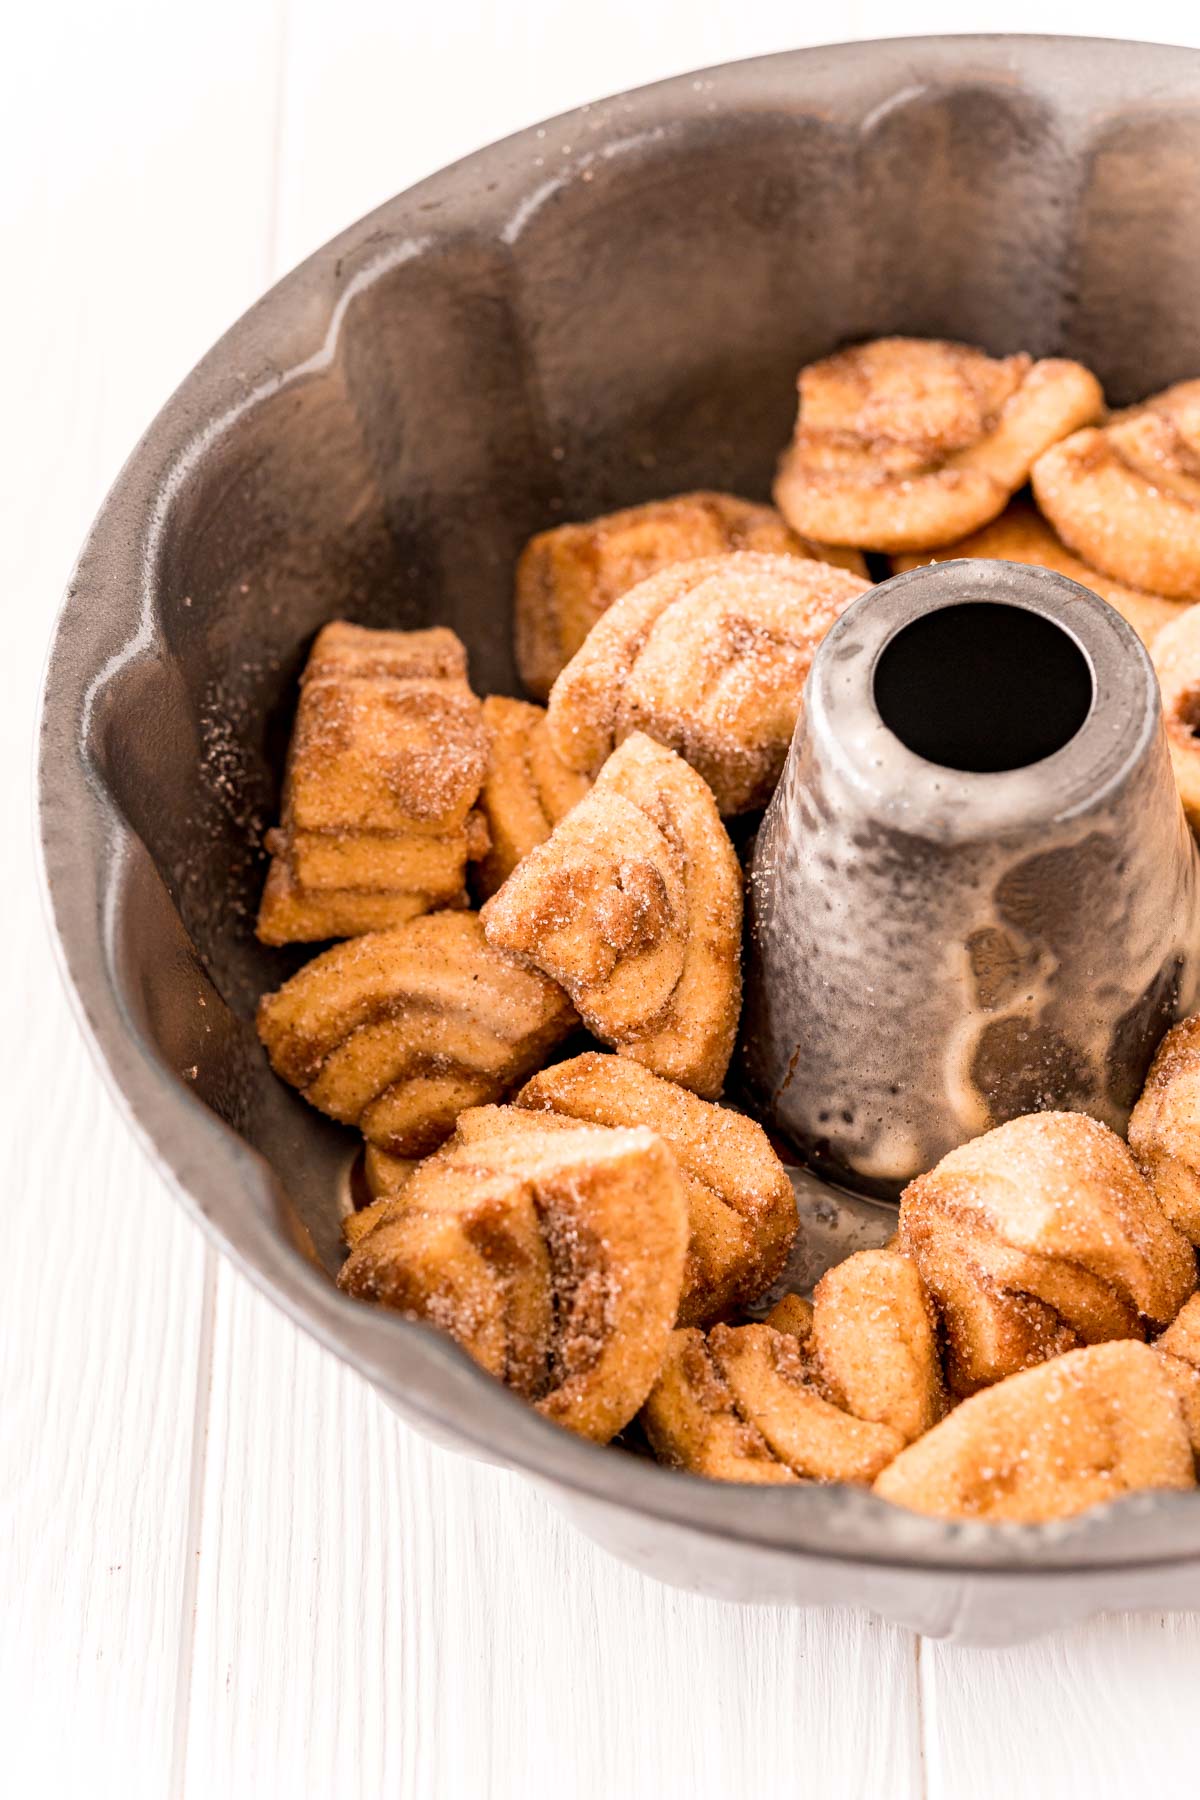 Quartered cinnamon rolls coated in cinnamon sugar in a bundt pan to make monkey bread.